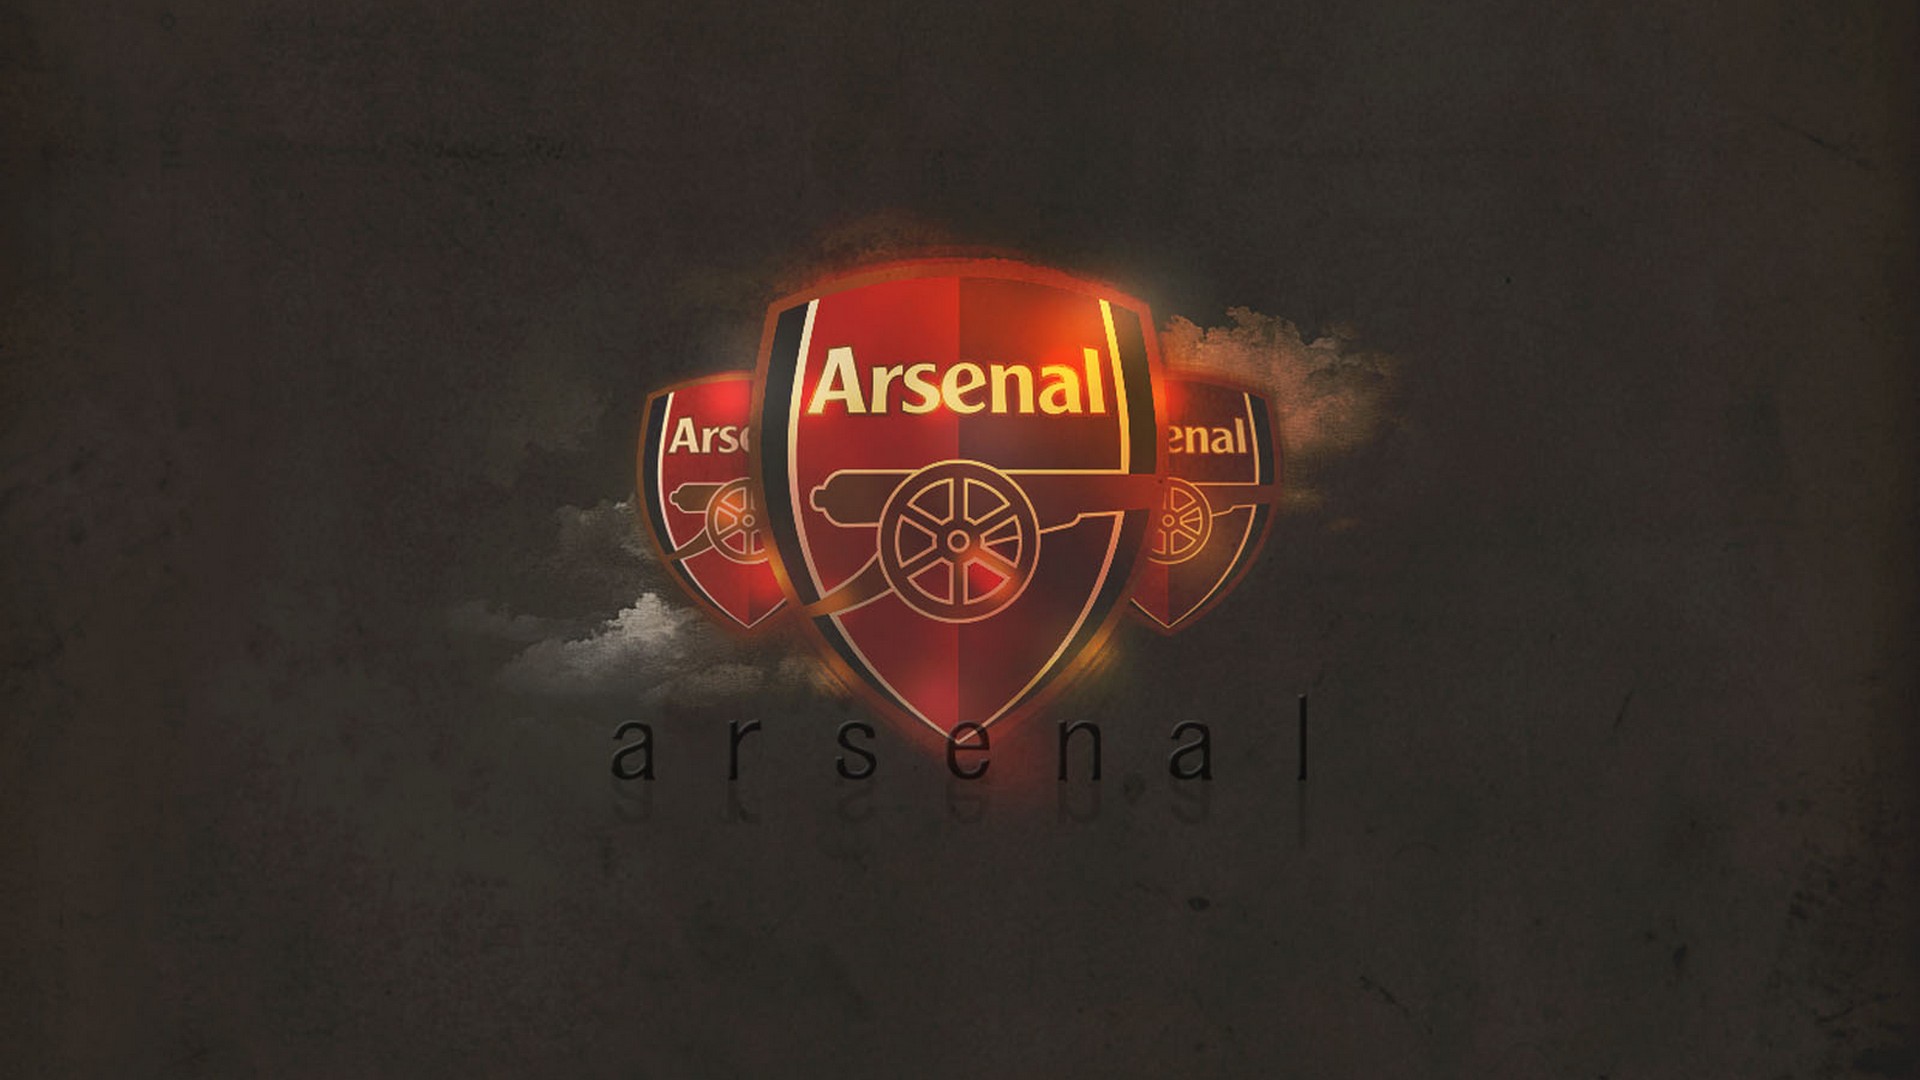 Cool Arsenal Fc Wallpaper Hd 2020 Live Wallpaper Hd